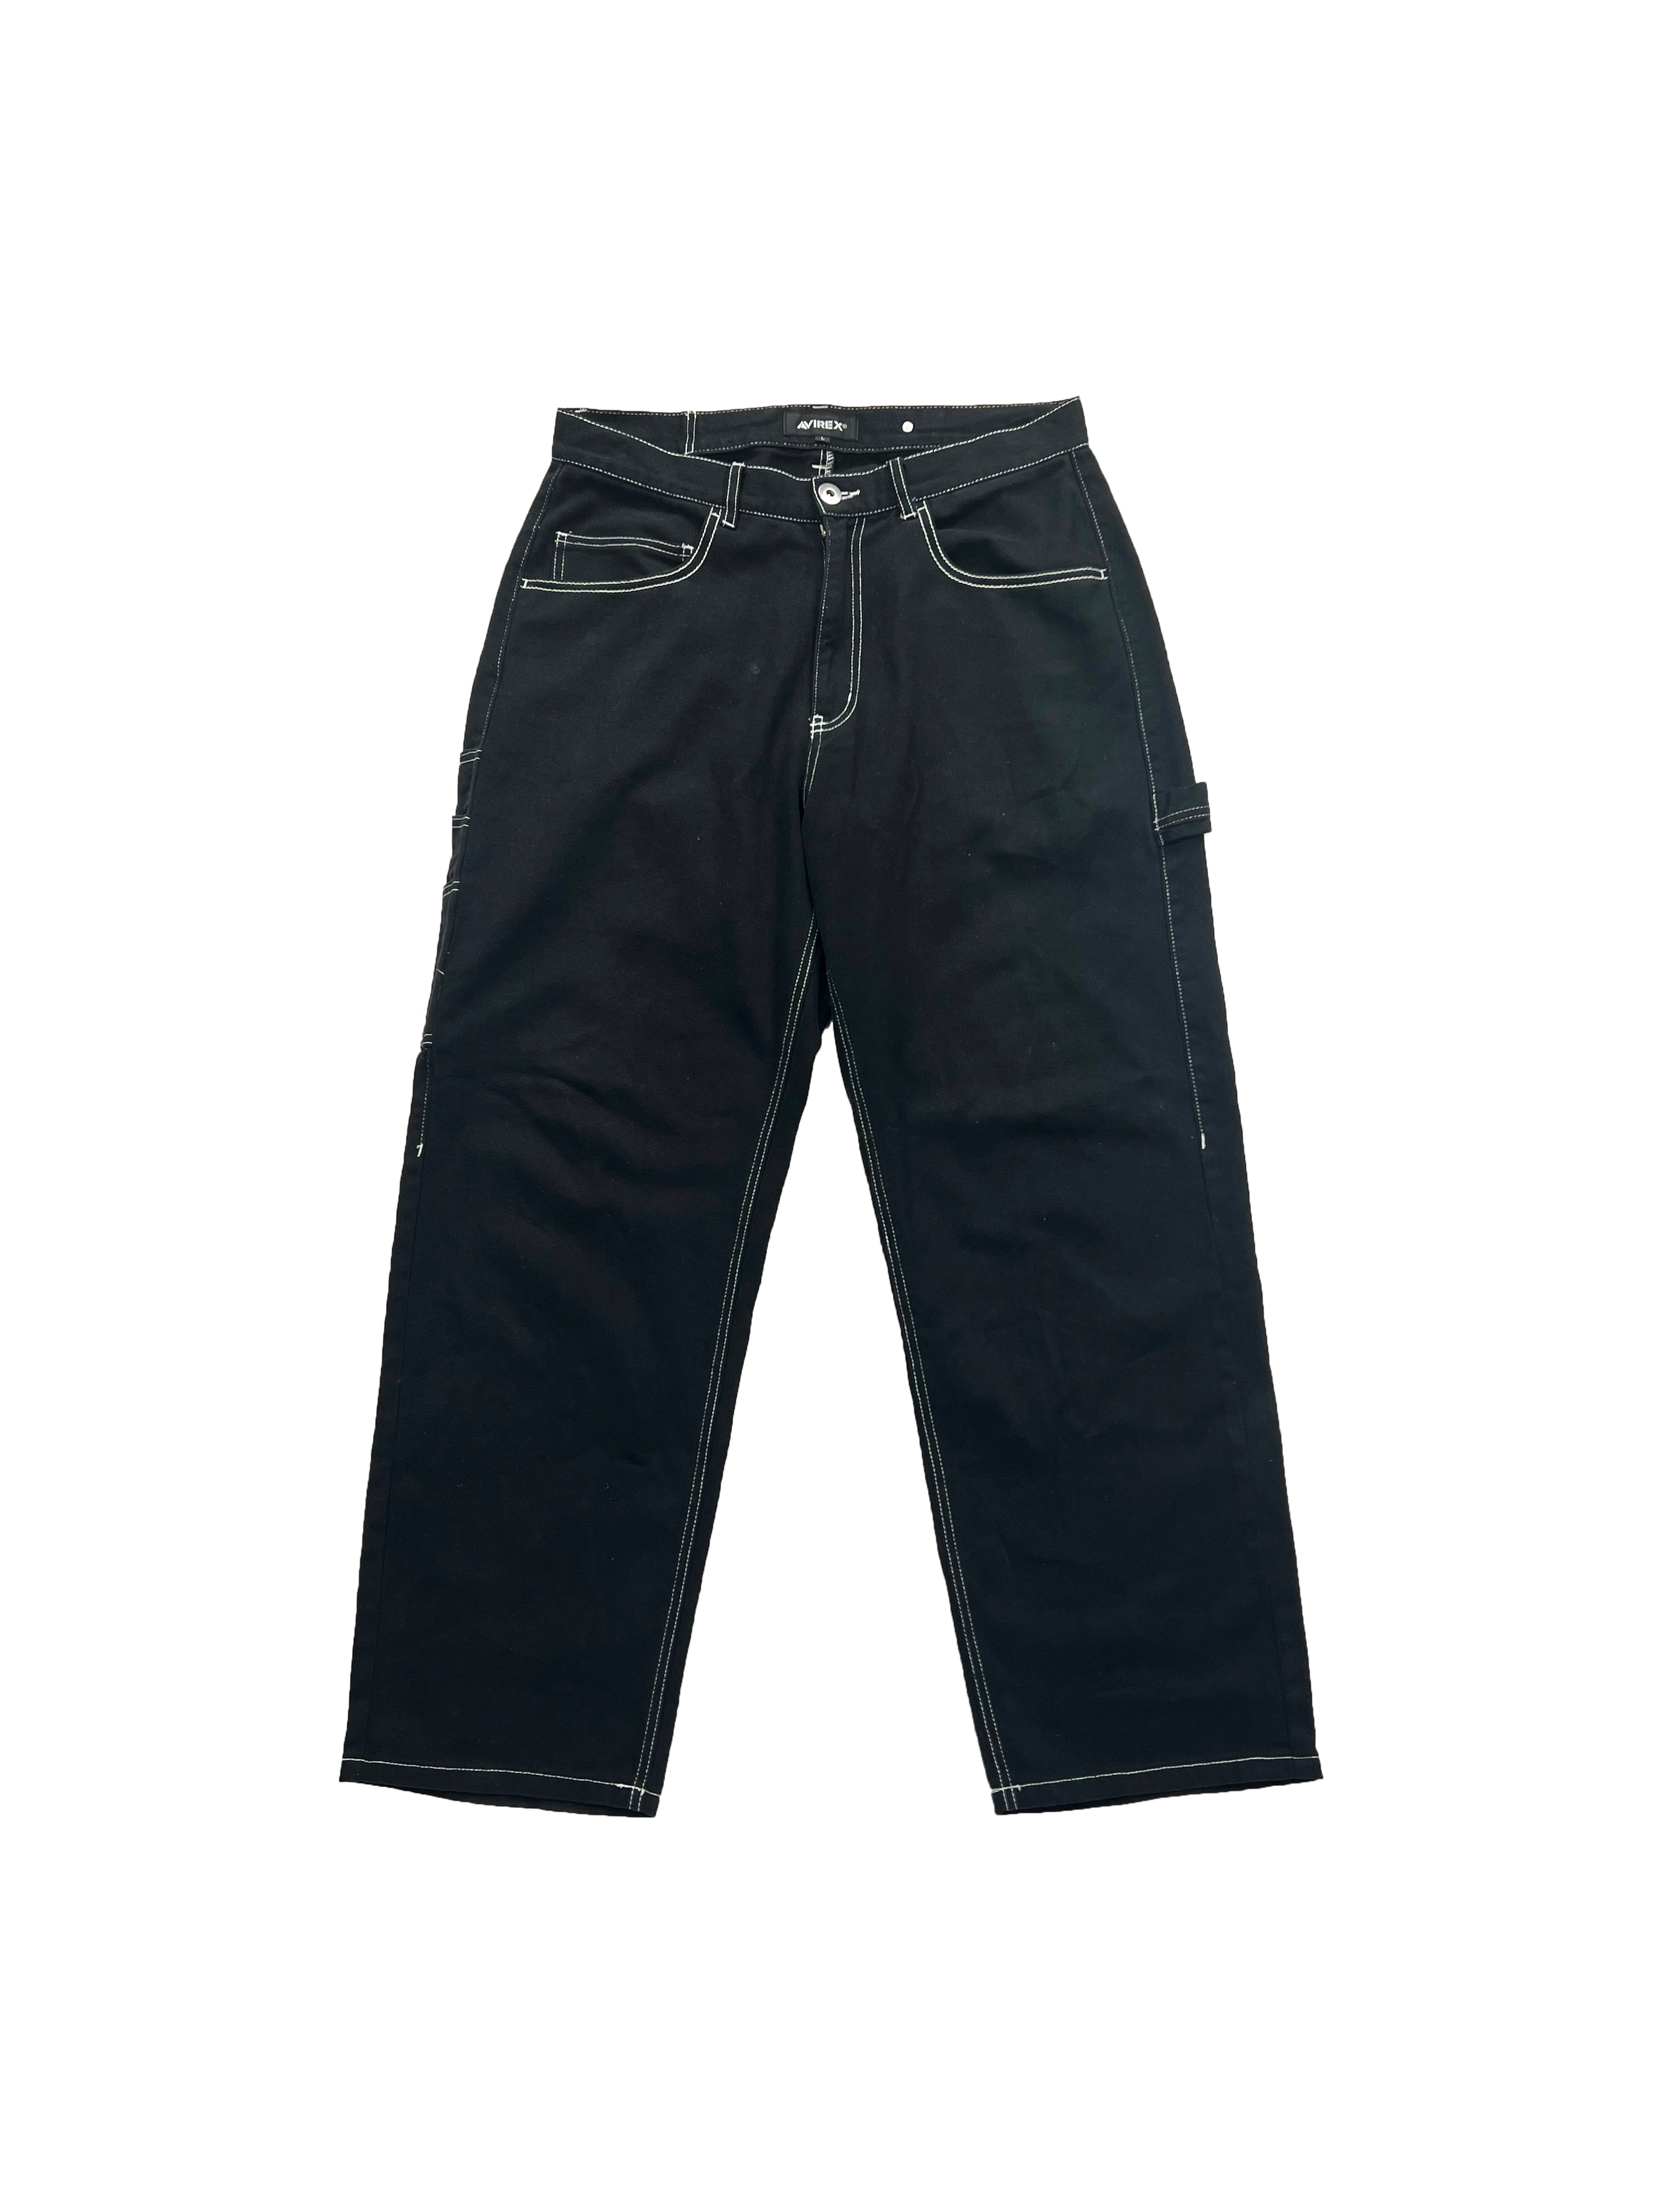 Avirex Black Mole Skin Carpenter Jeans 00's